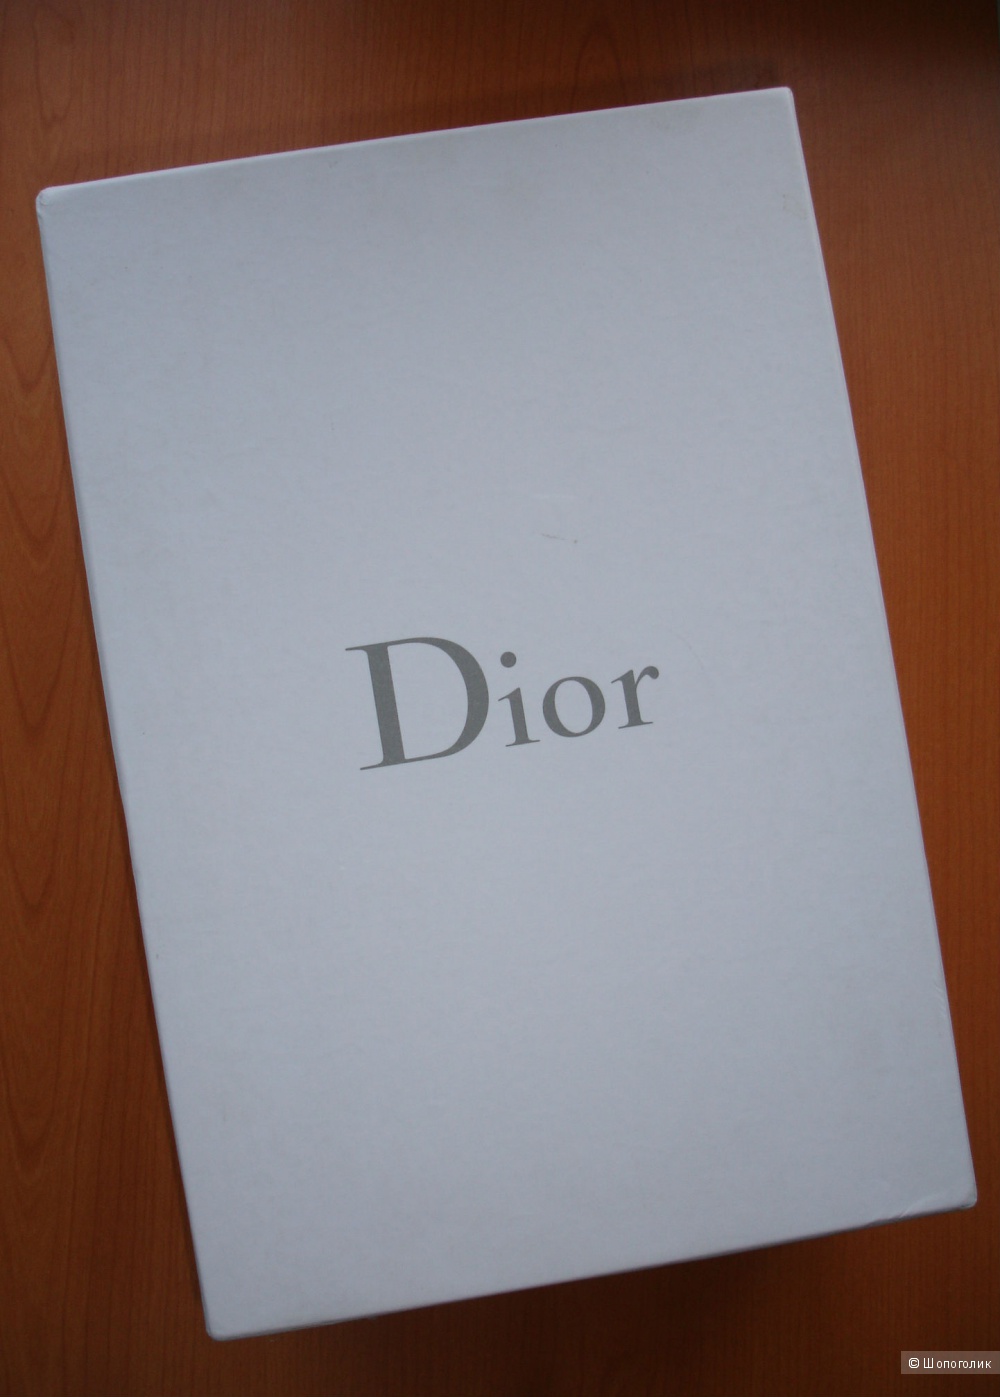 Туфли Christian Dior, размер 38